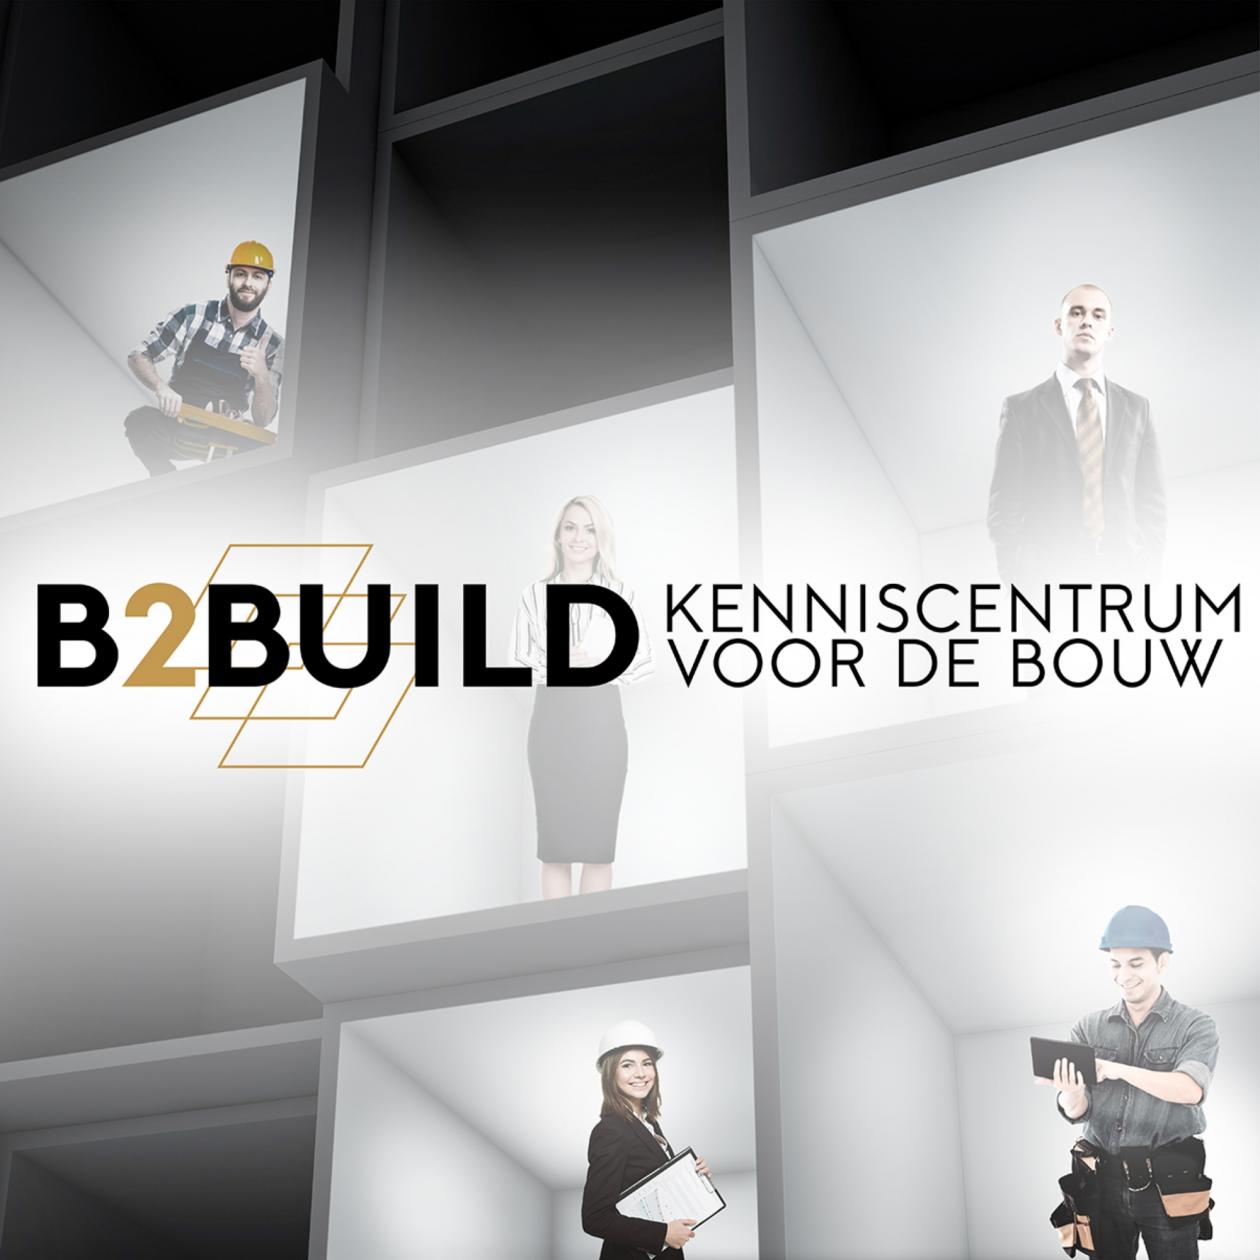 (c) B2build.be